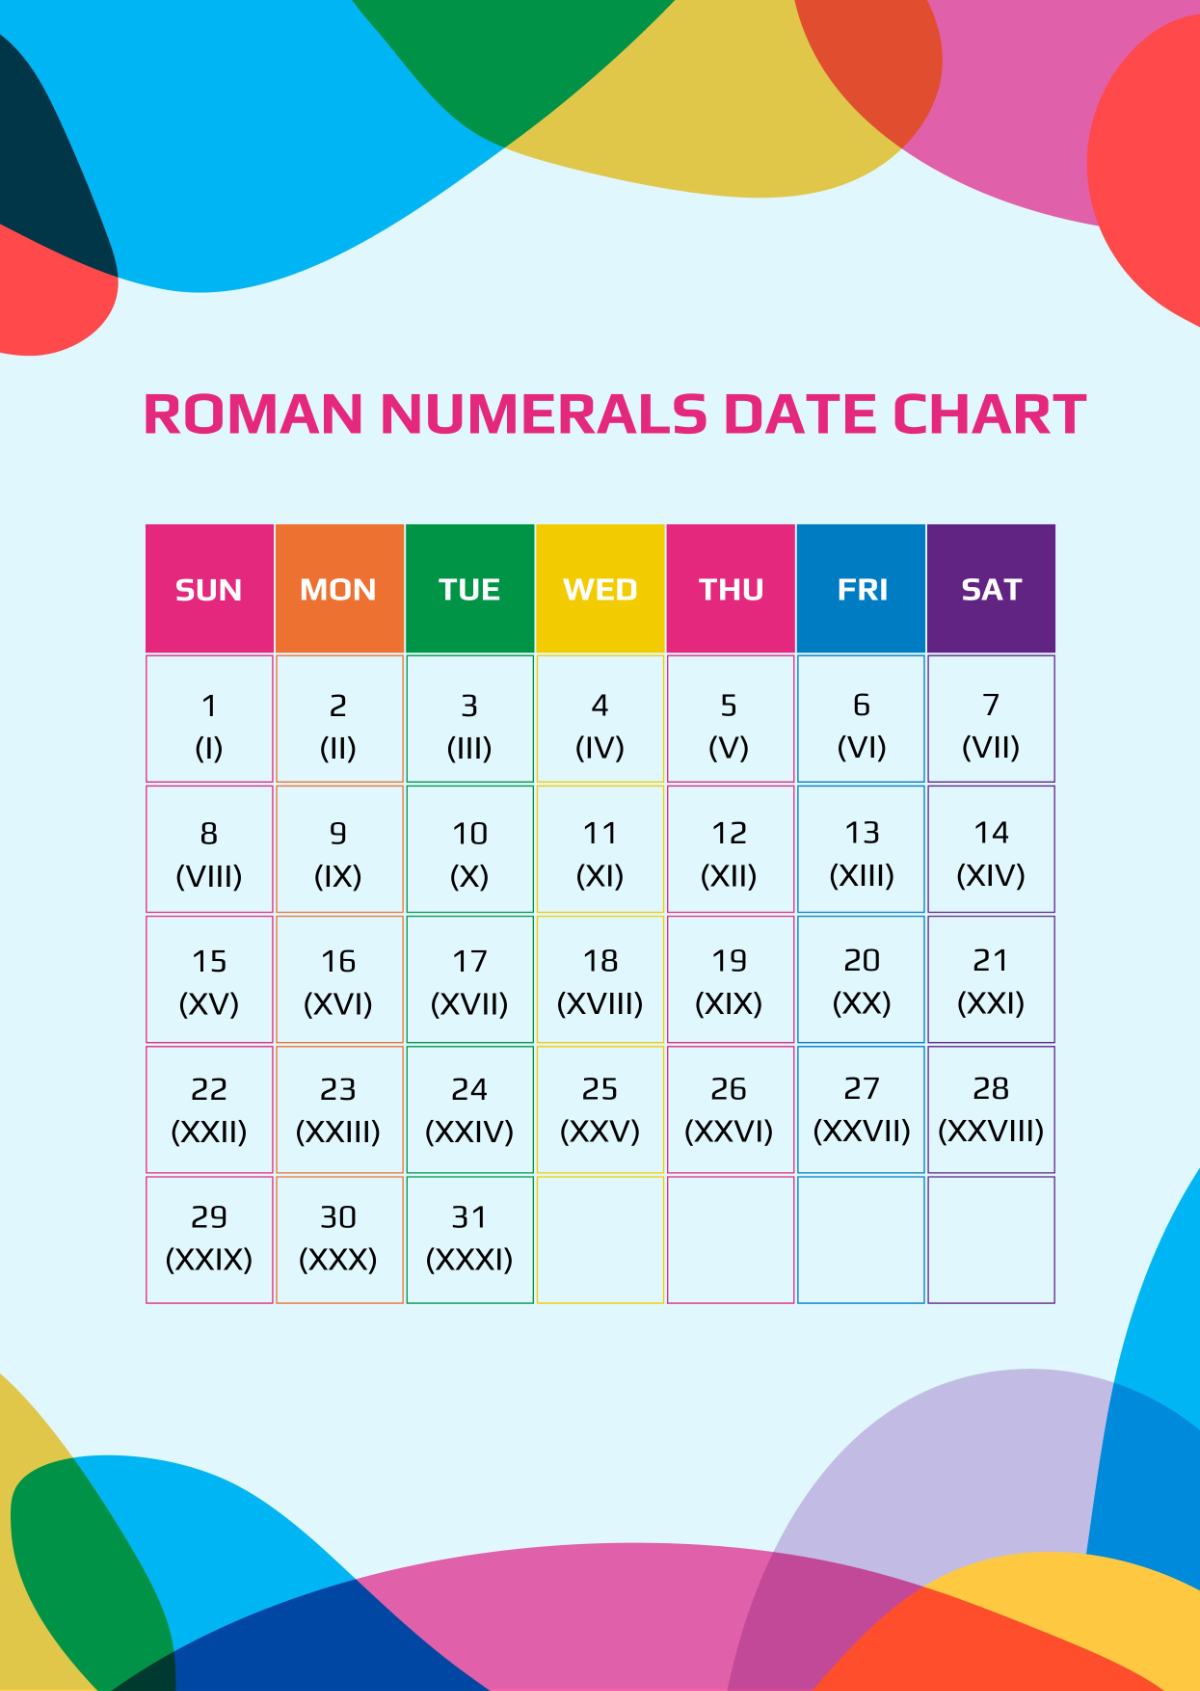 Roman Numerals Date Chart